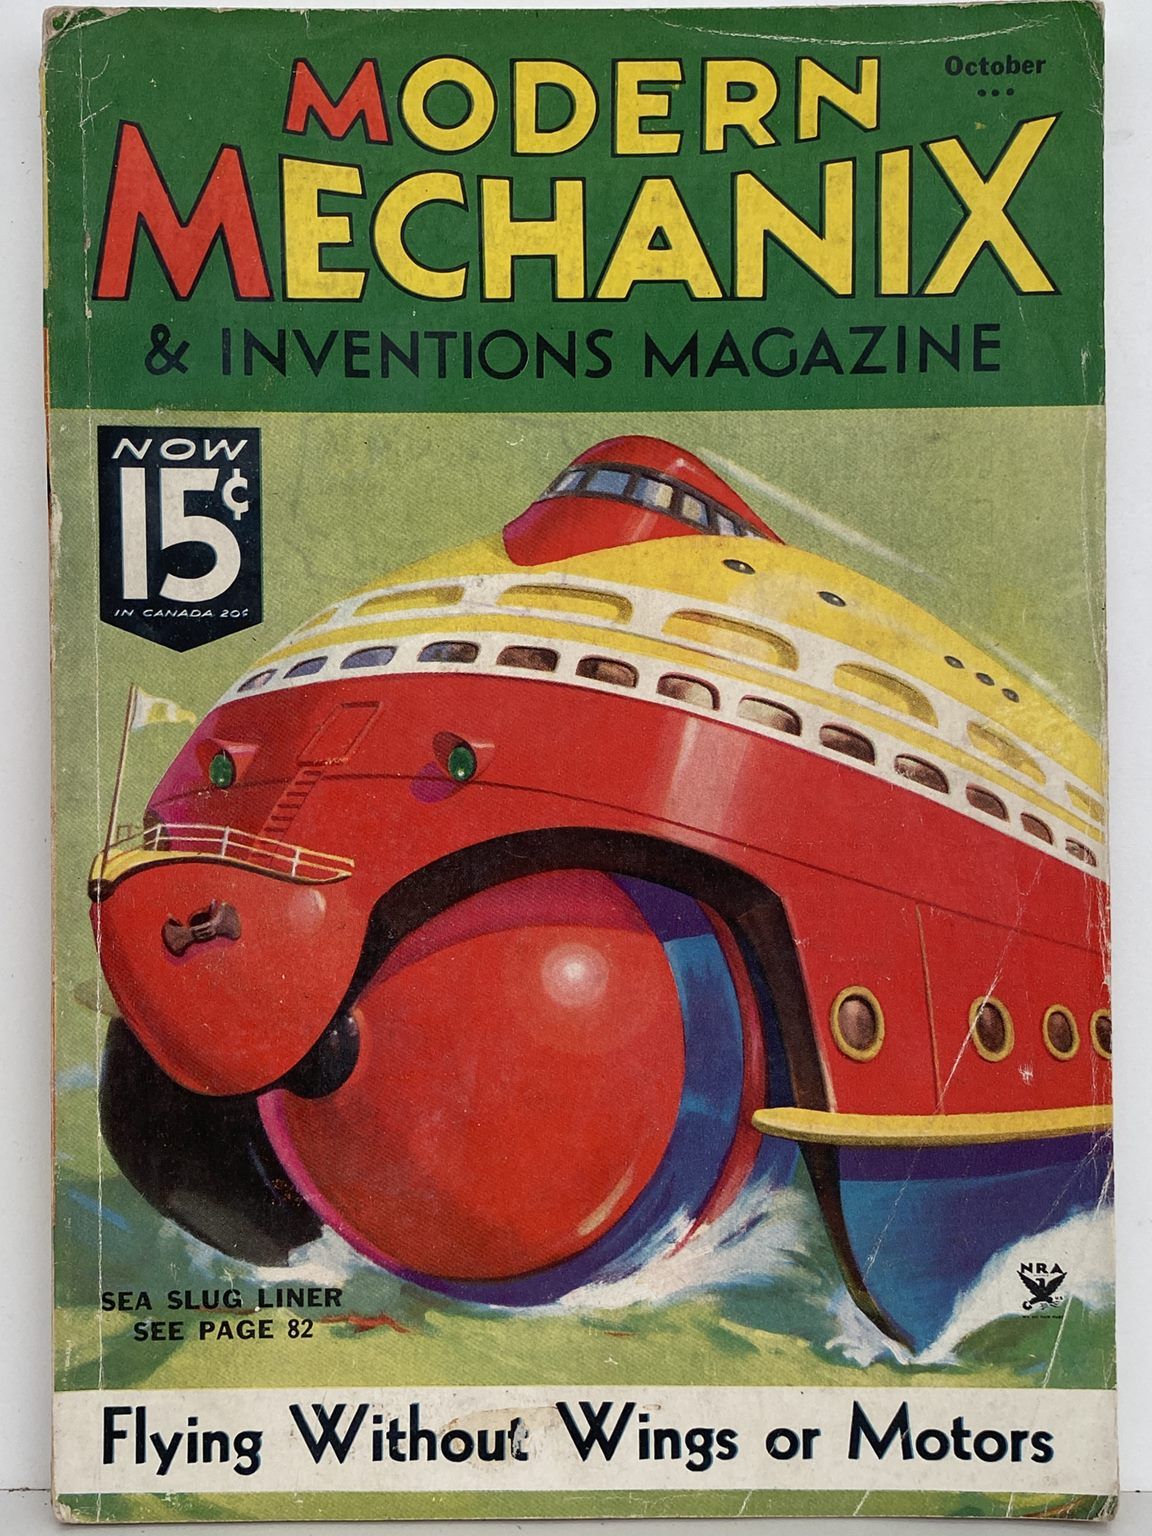 VINTAGE MAGAZINE: Modern Mechanix and Inventions - Vol 14, No. 6 - October 1935